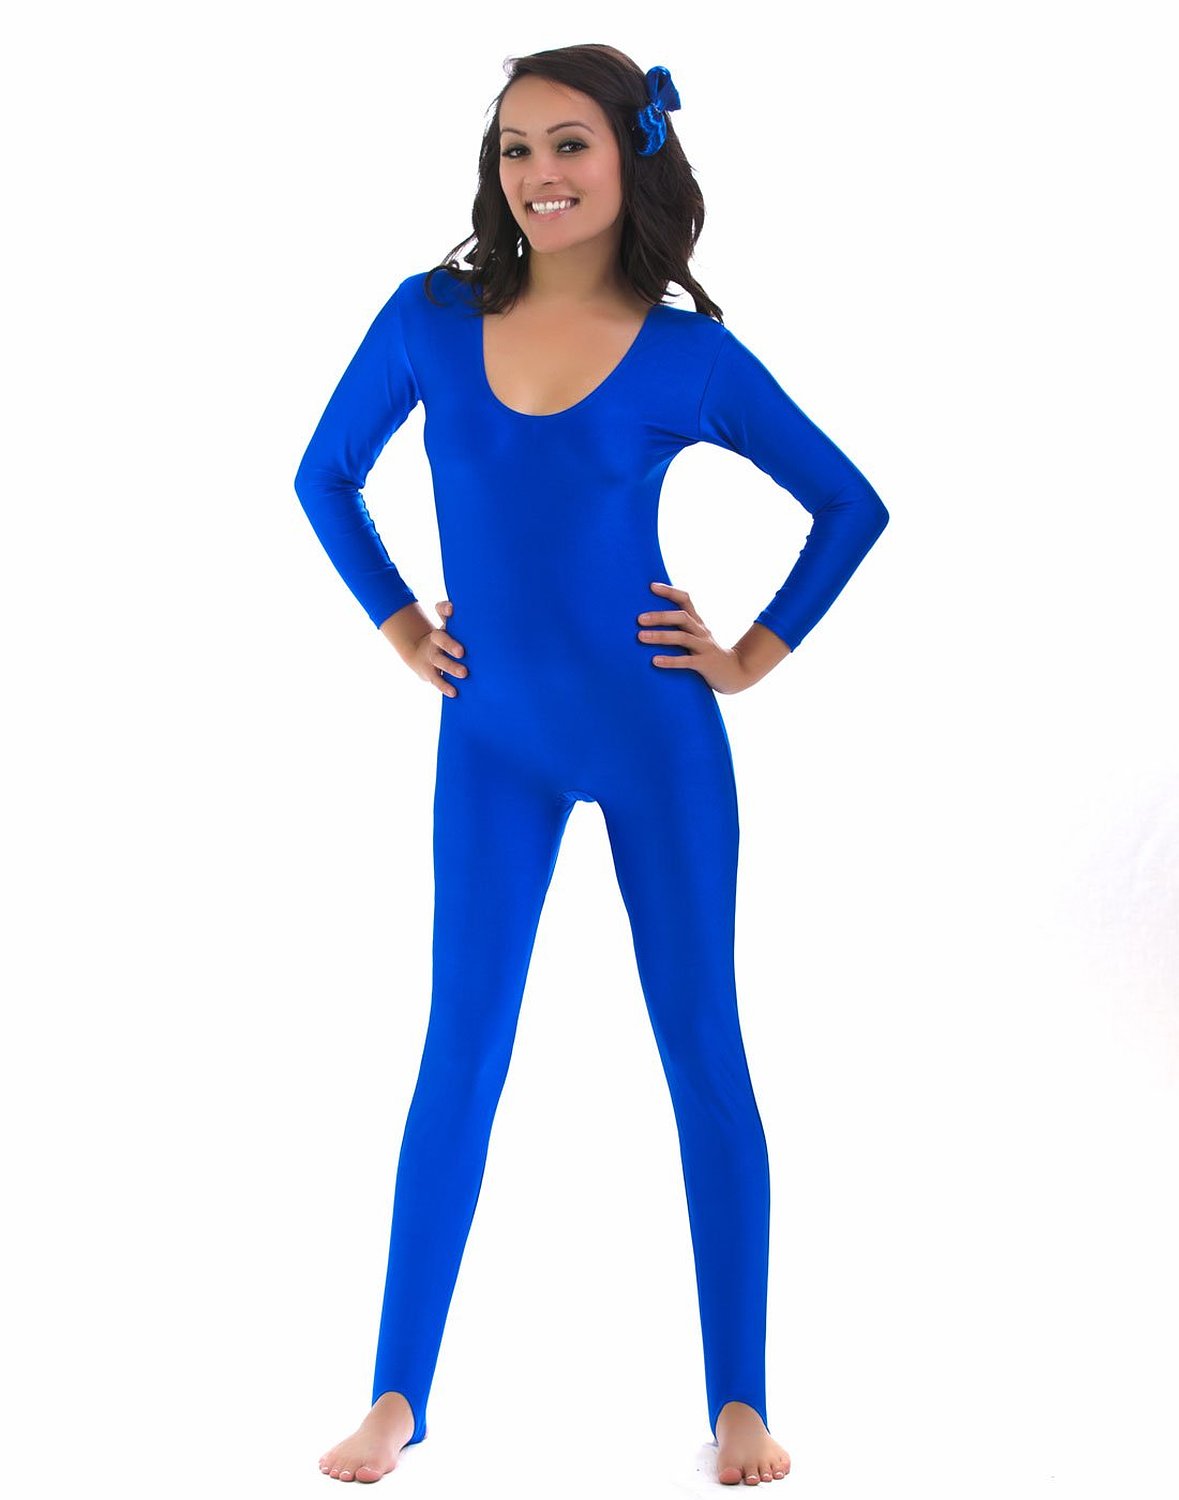 Blue Spandex Gymnastics Suit